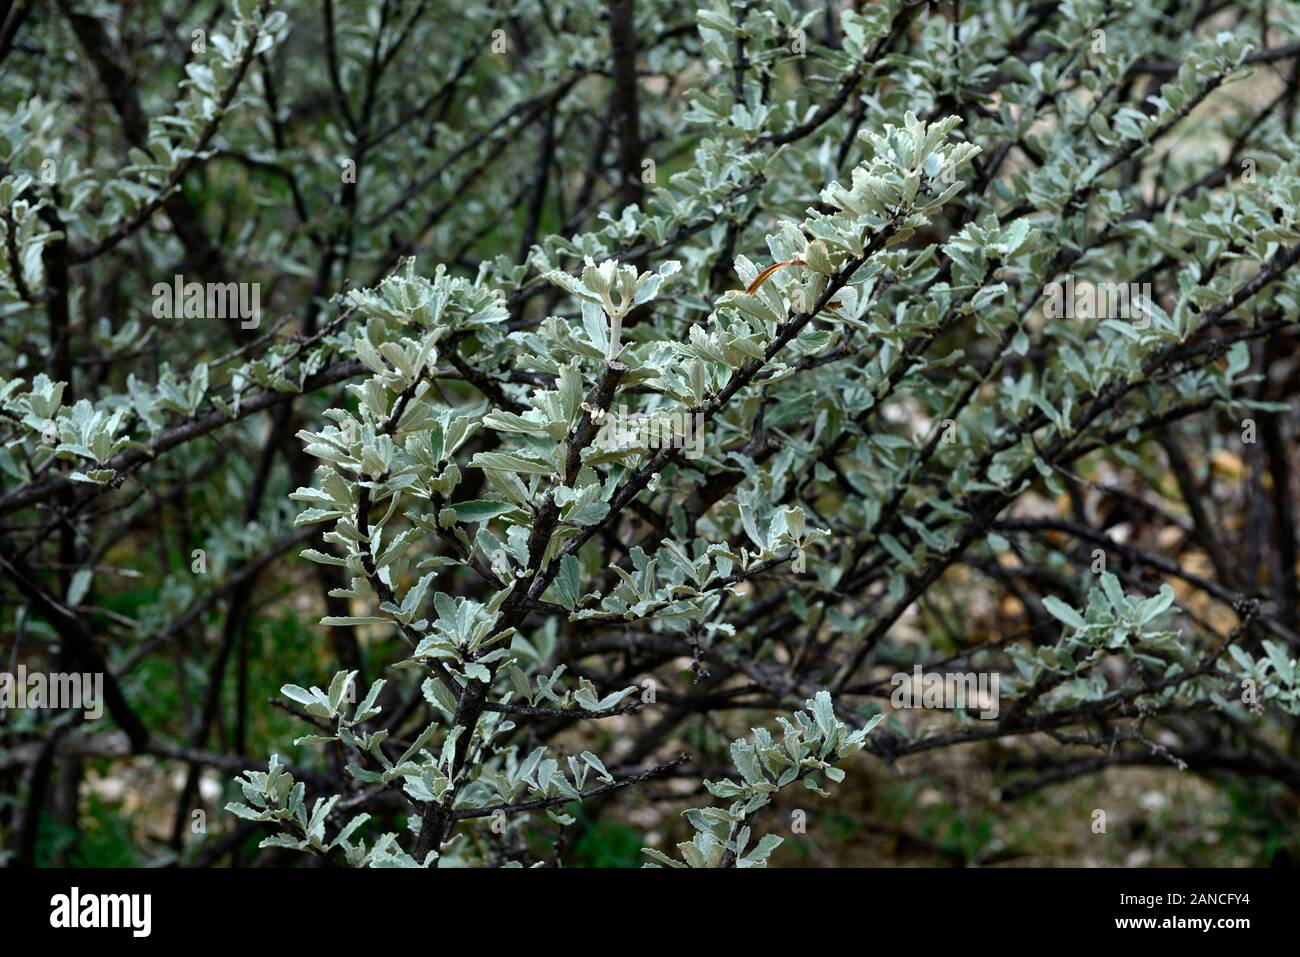 Catophractes alexandri,spiny shrub,small tree,trees,shrubs,leaves,foliage,namibian native plants,plant,namibia,RM floral Stock Photo